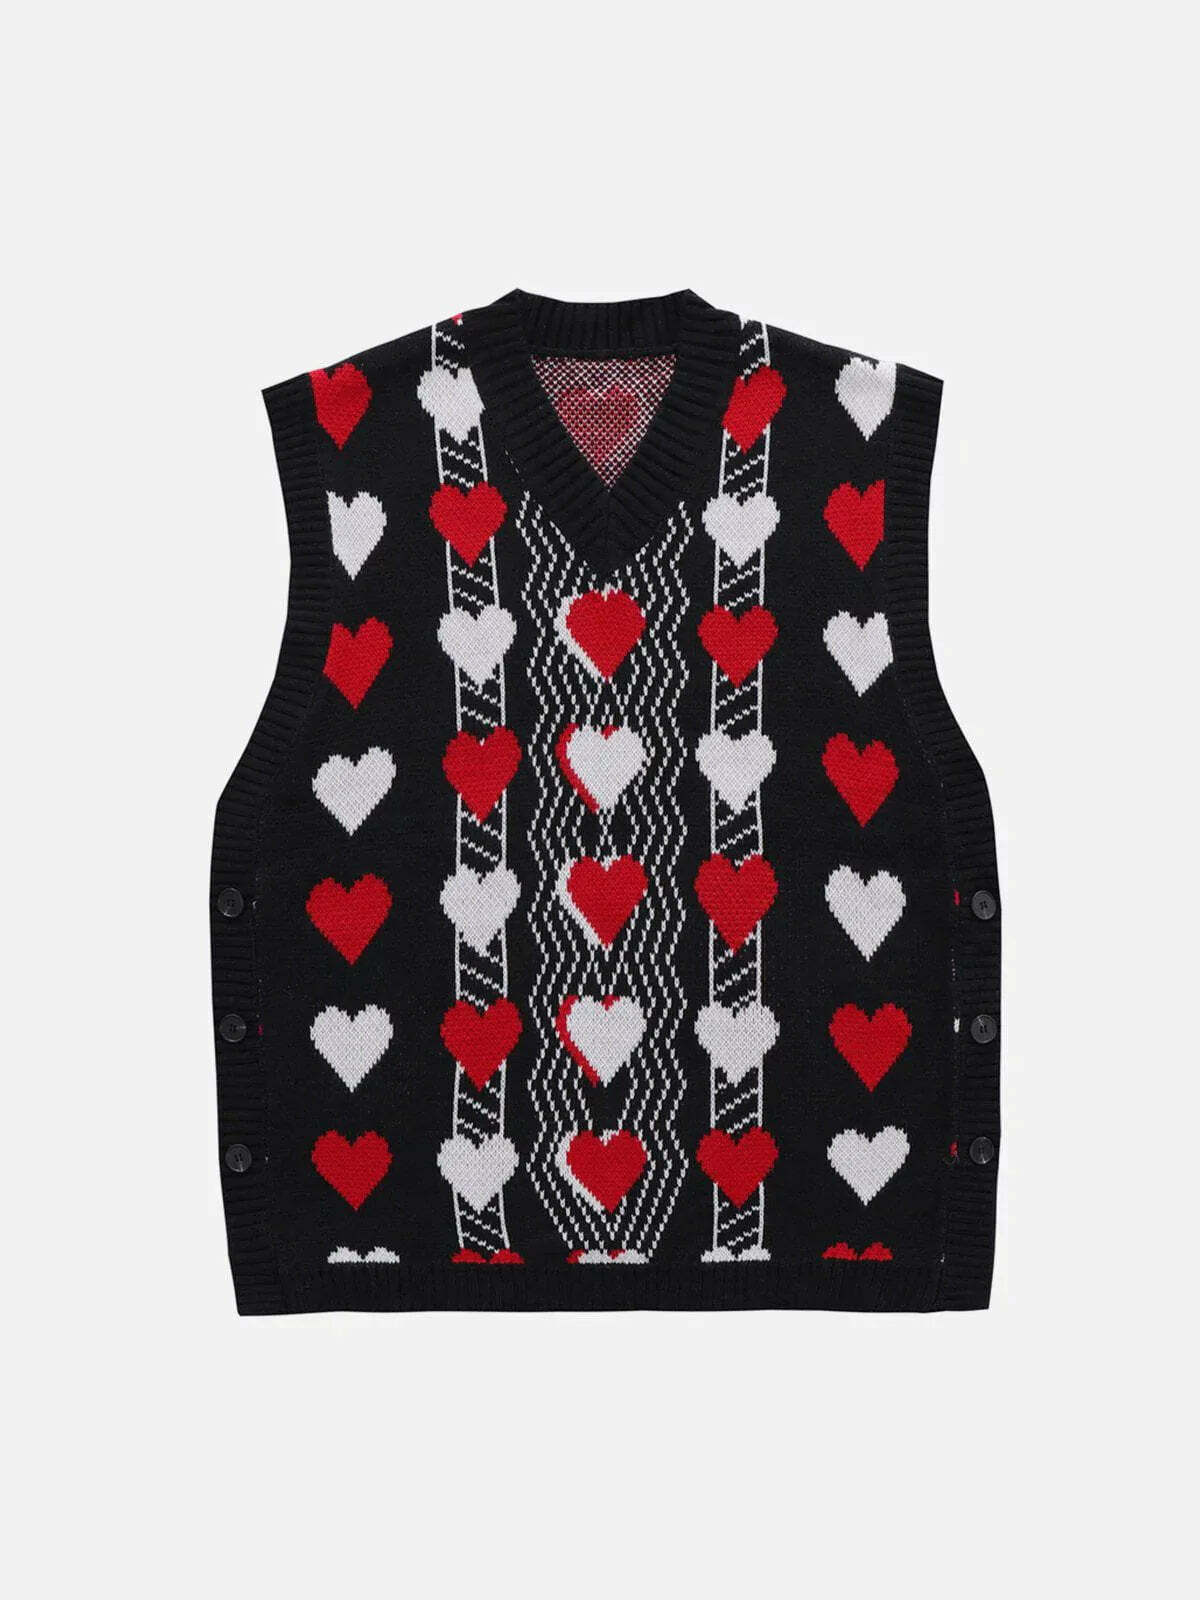 retro clash sweater vest edgy  colorful y2k fashion 1007